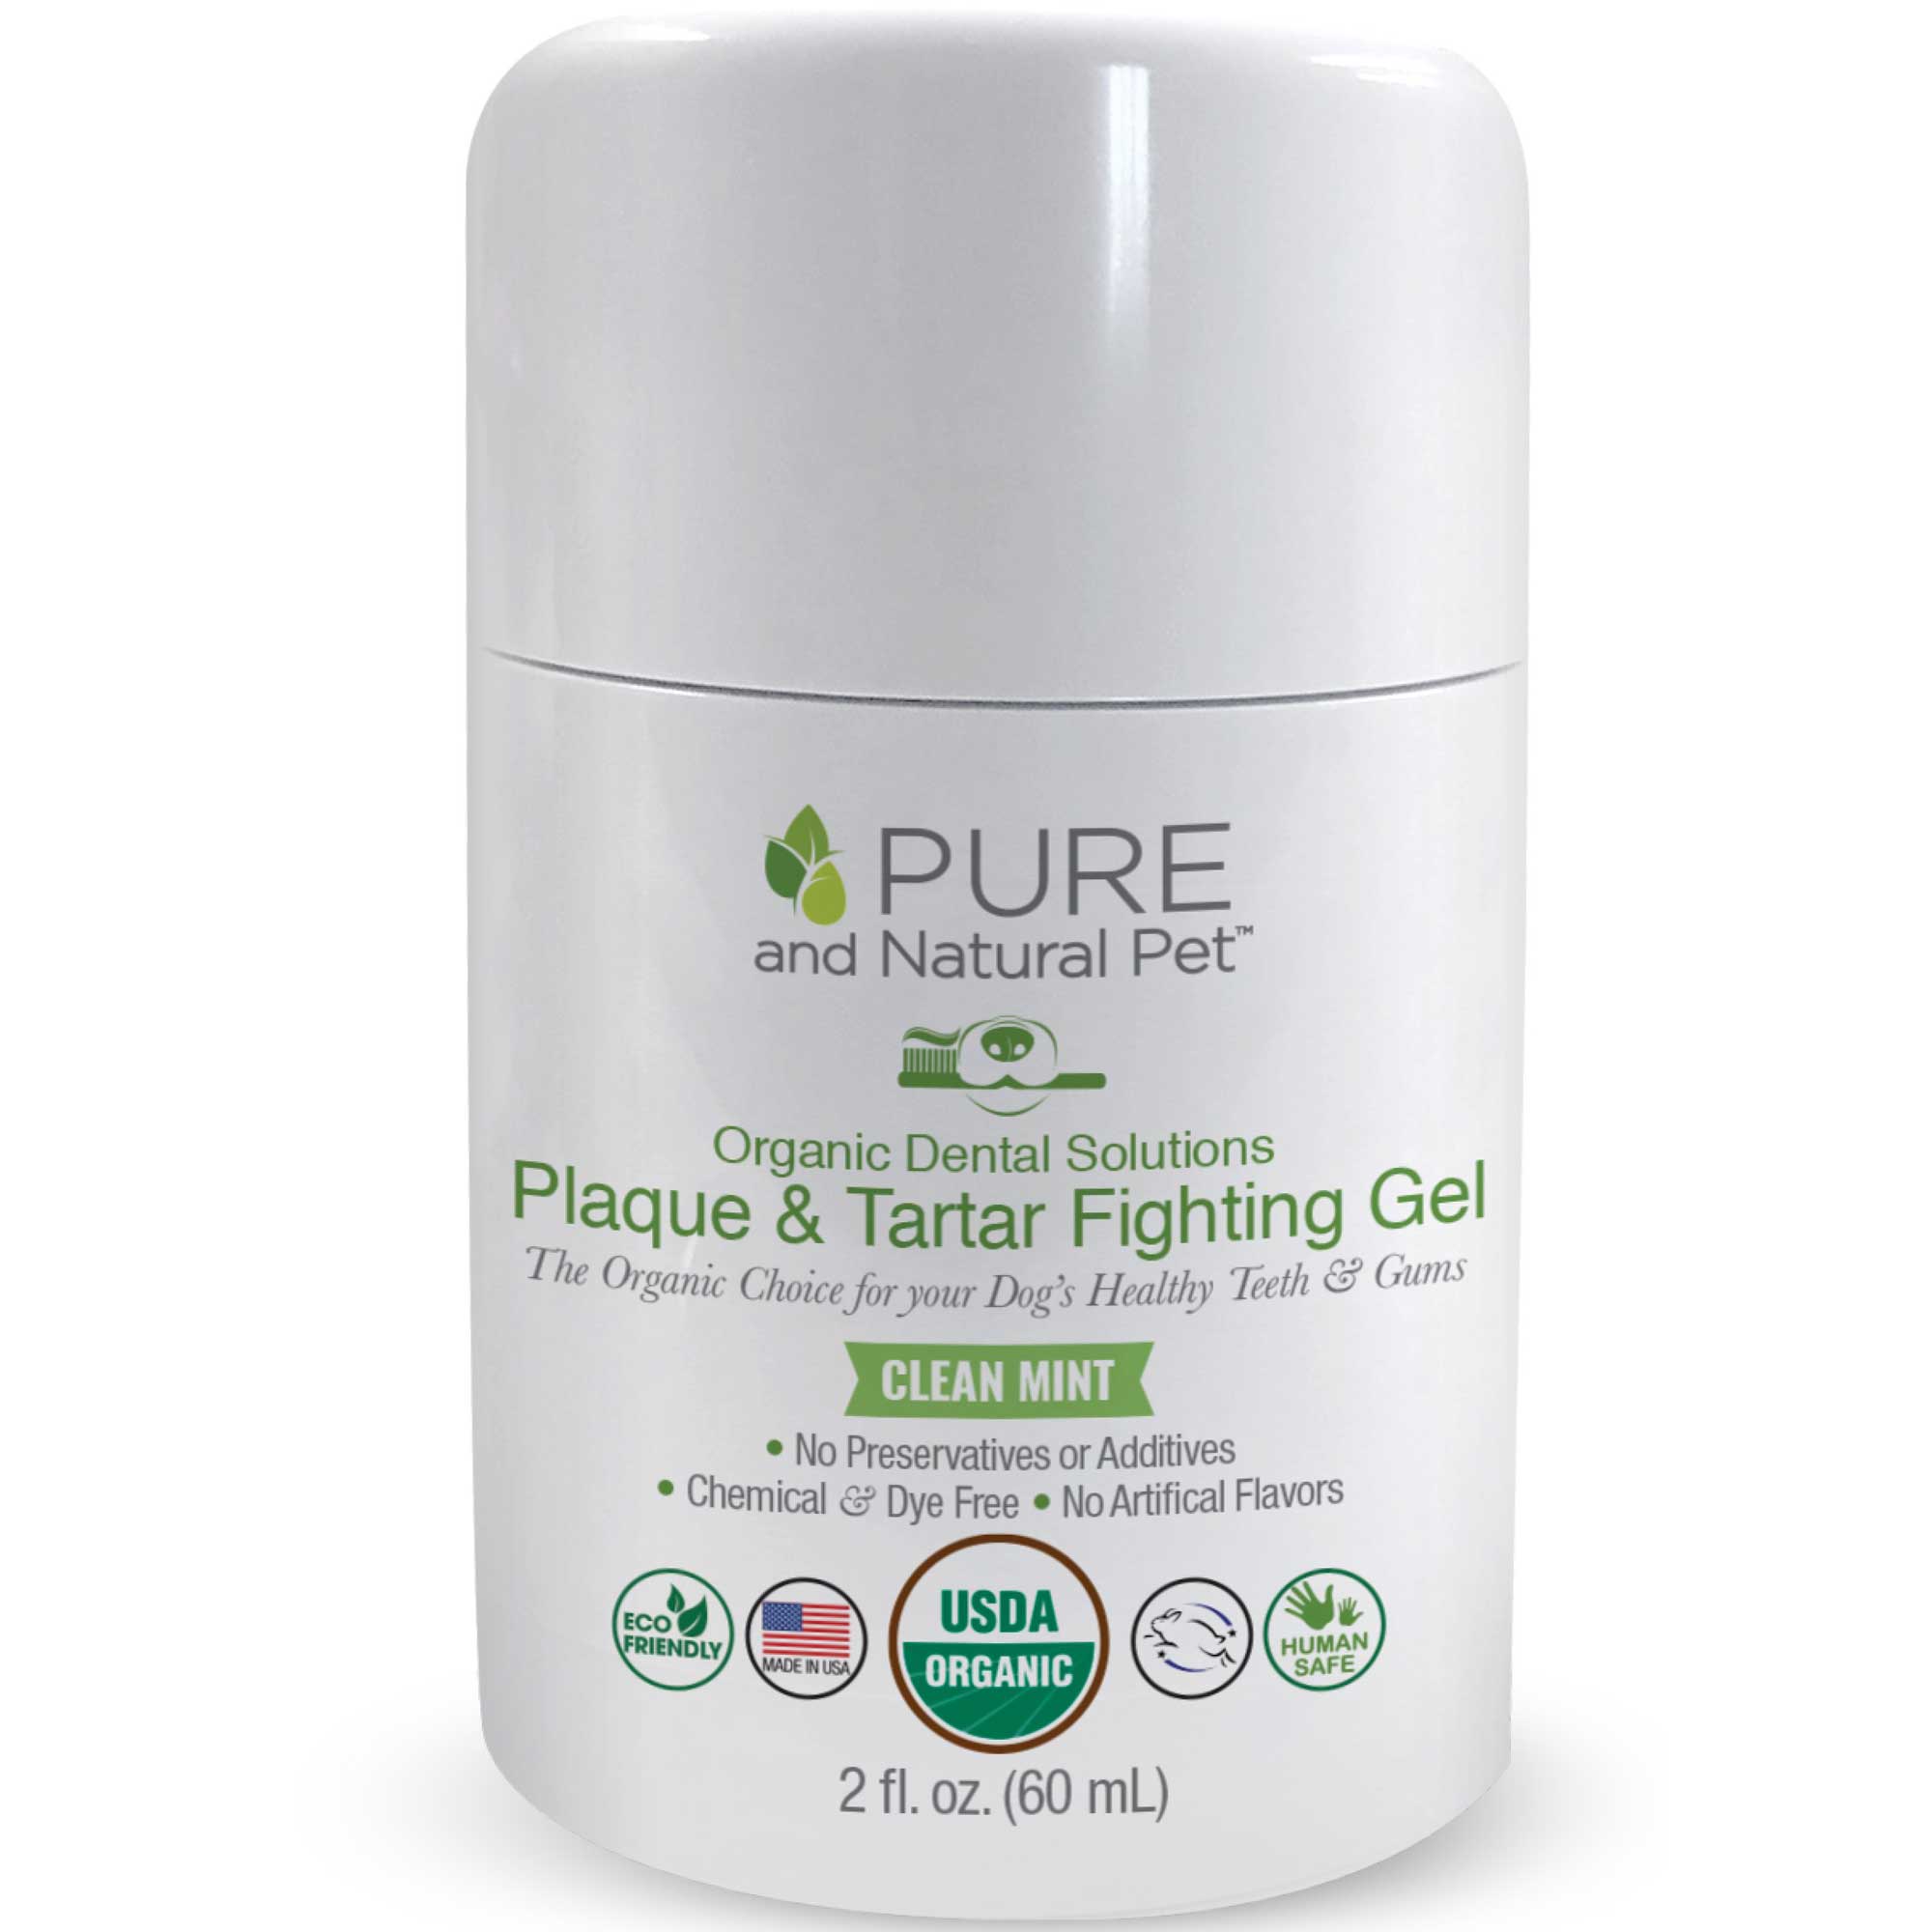 Pure and Natural Pet Organic Dental Solutions Plaque & Tartar Control Gel Usage